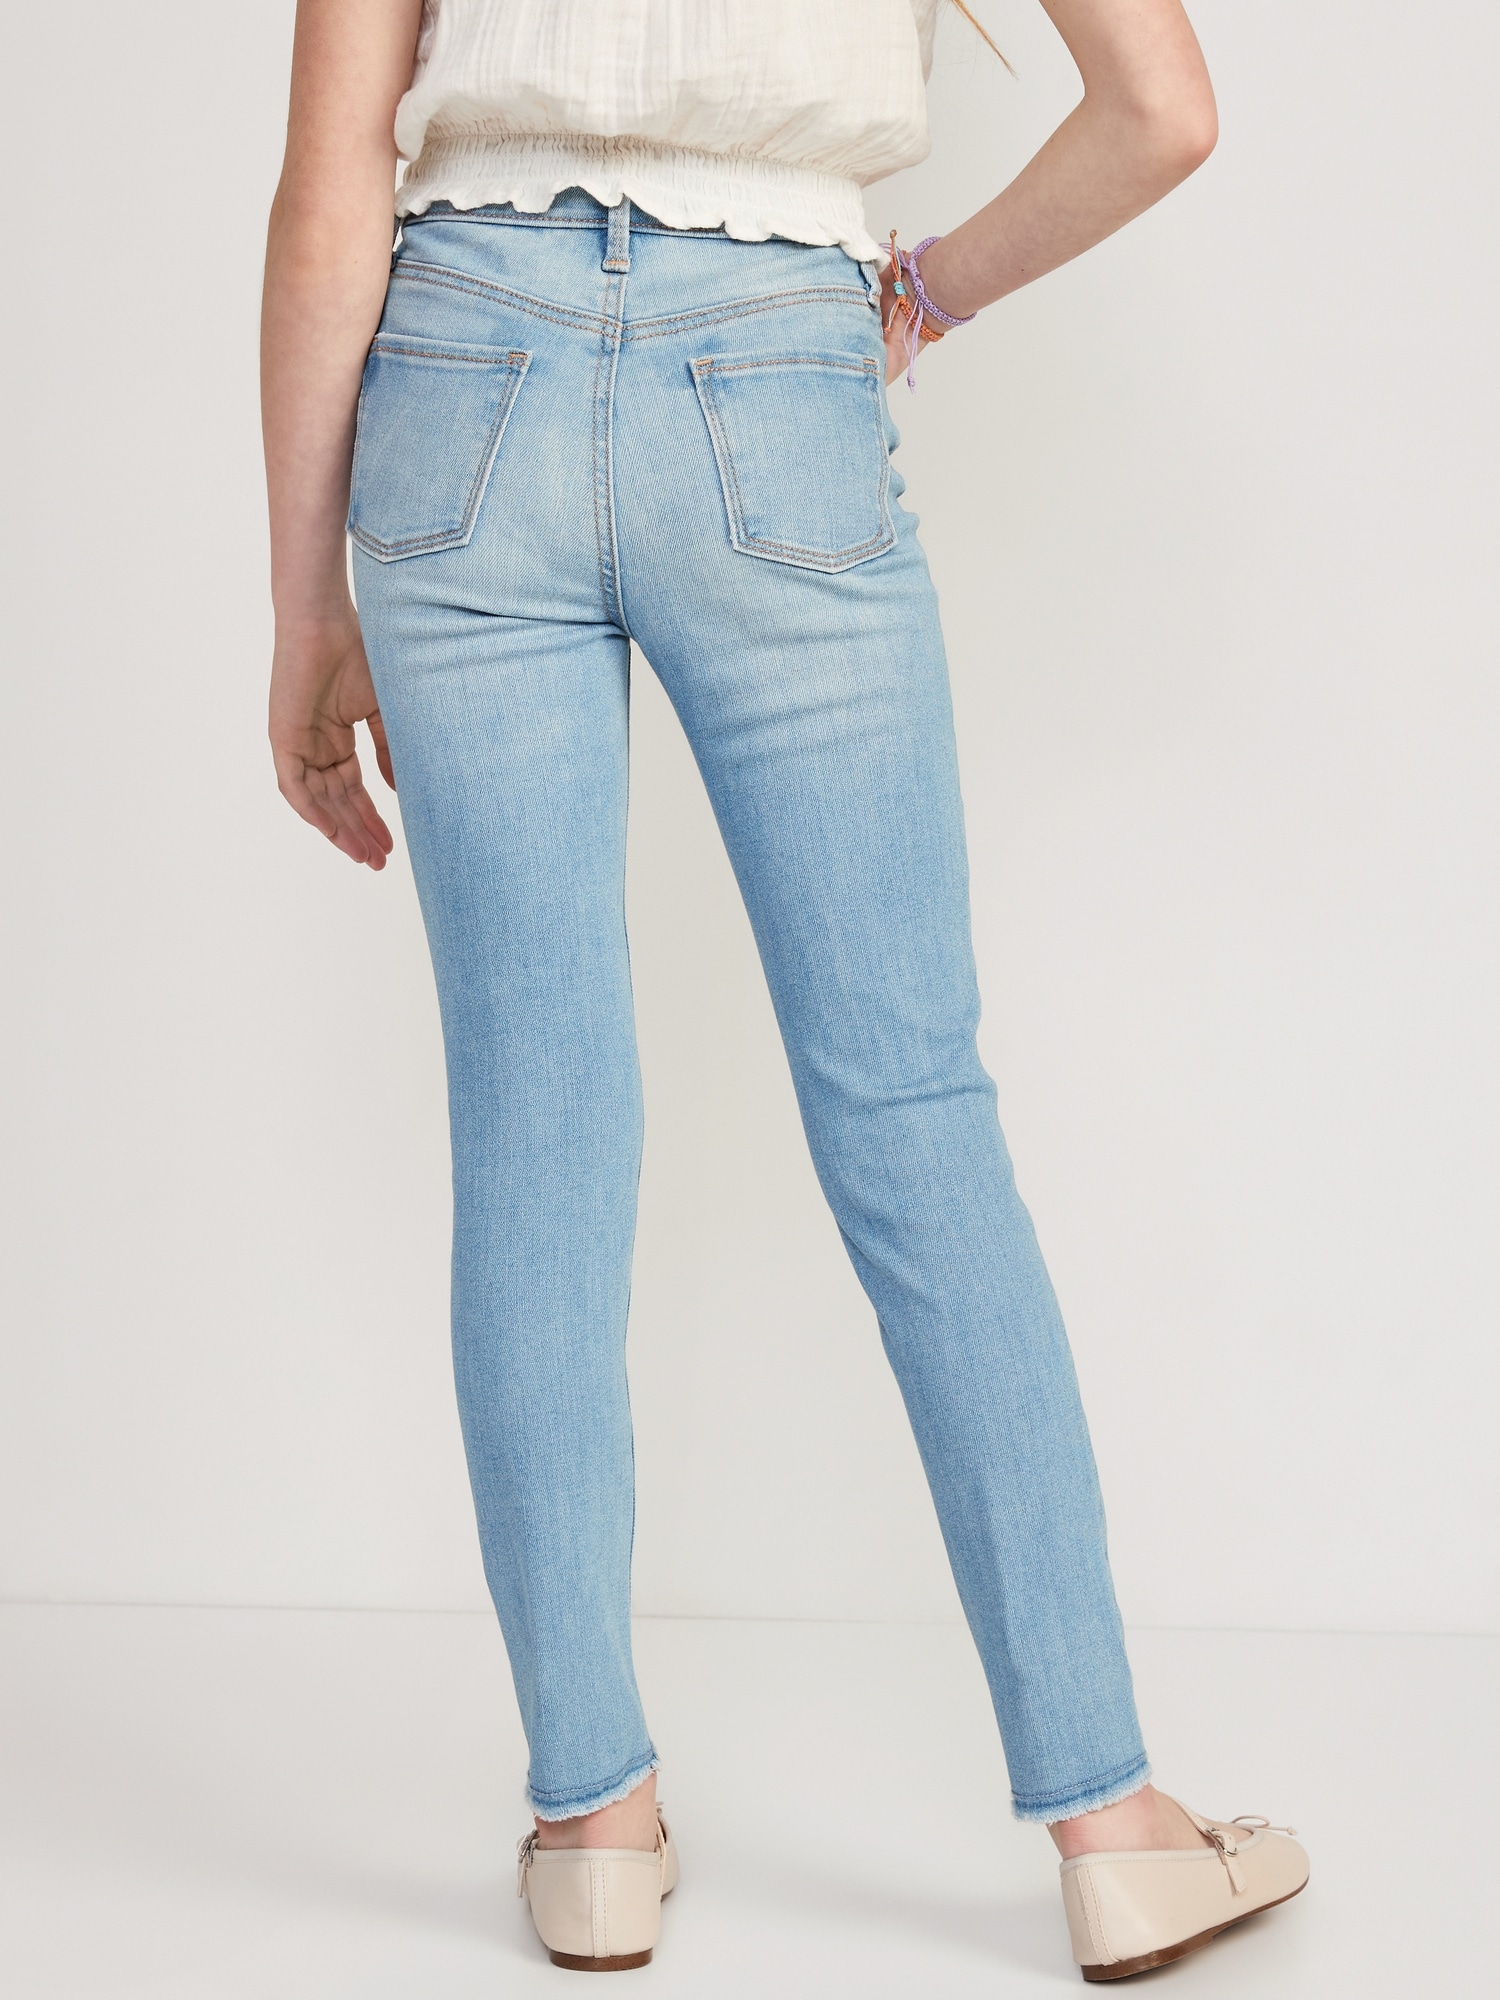 Buy online Dark Blue Cotton Jeggings from Jeans & jeggings for